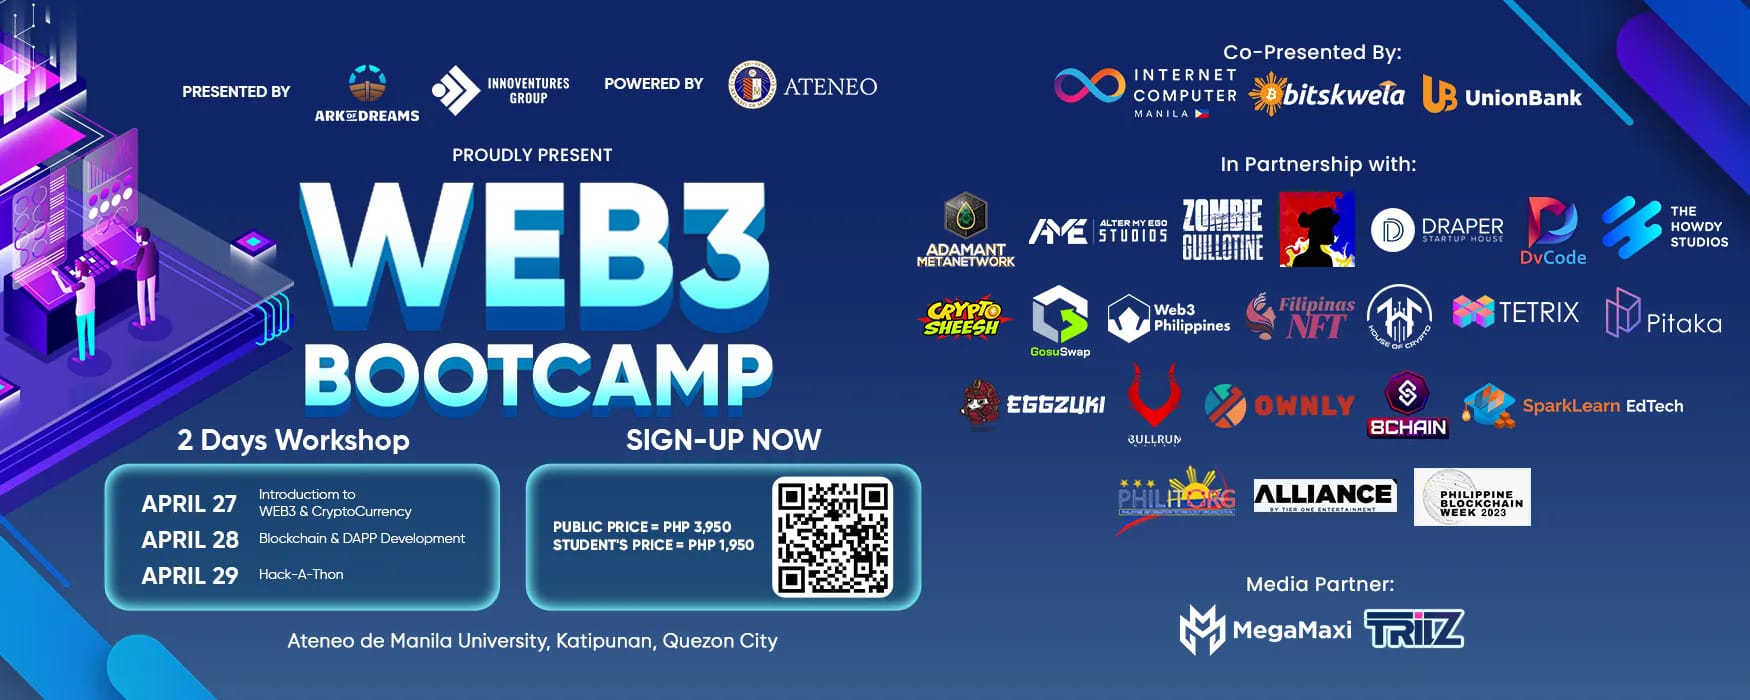 Web3 boot camp Ateneo